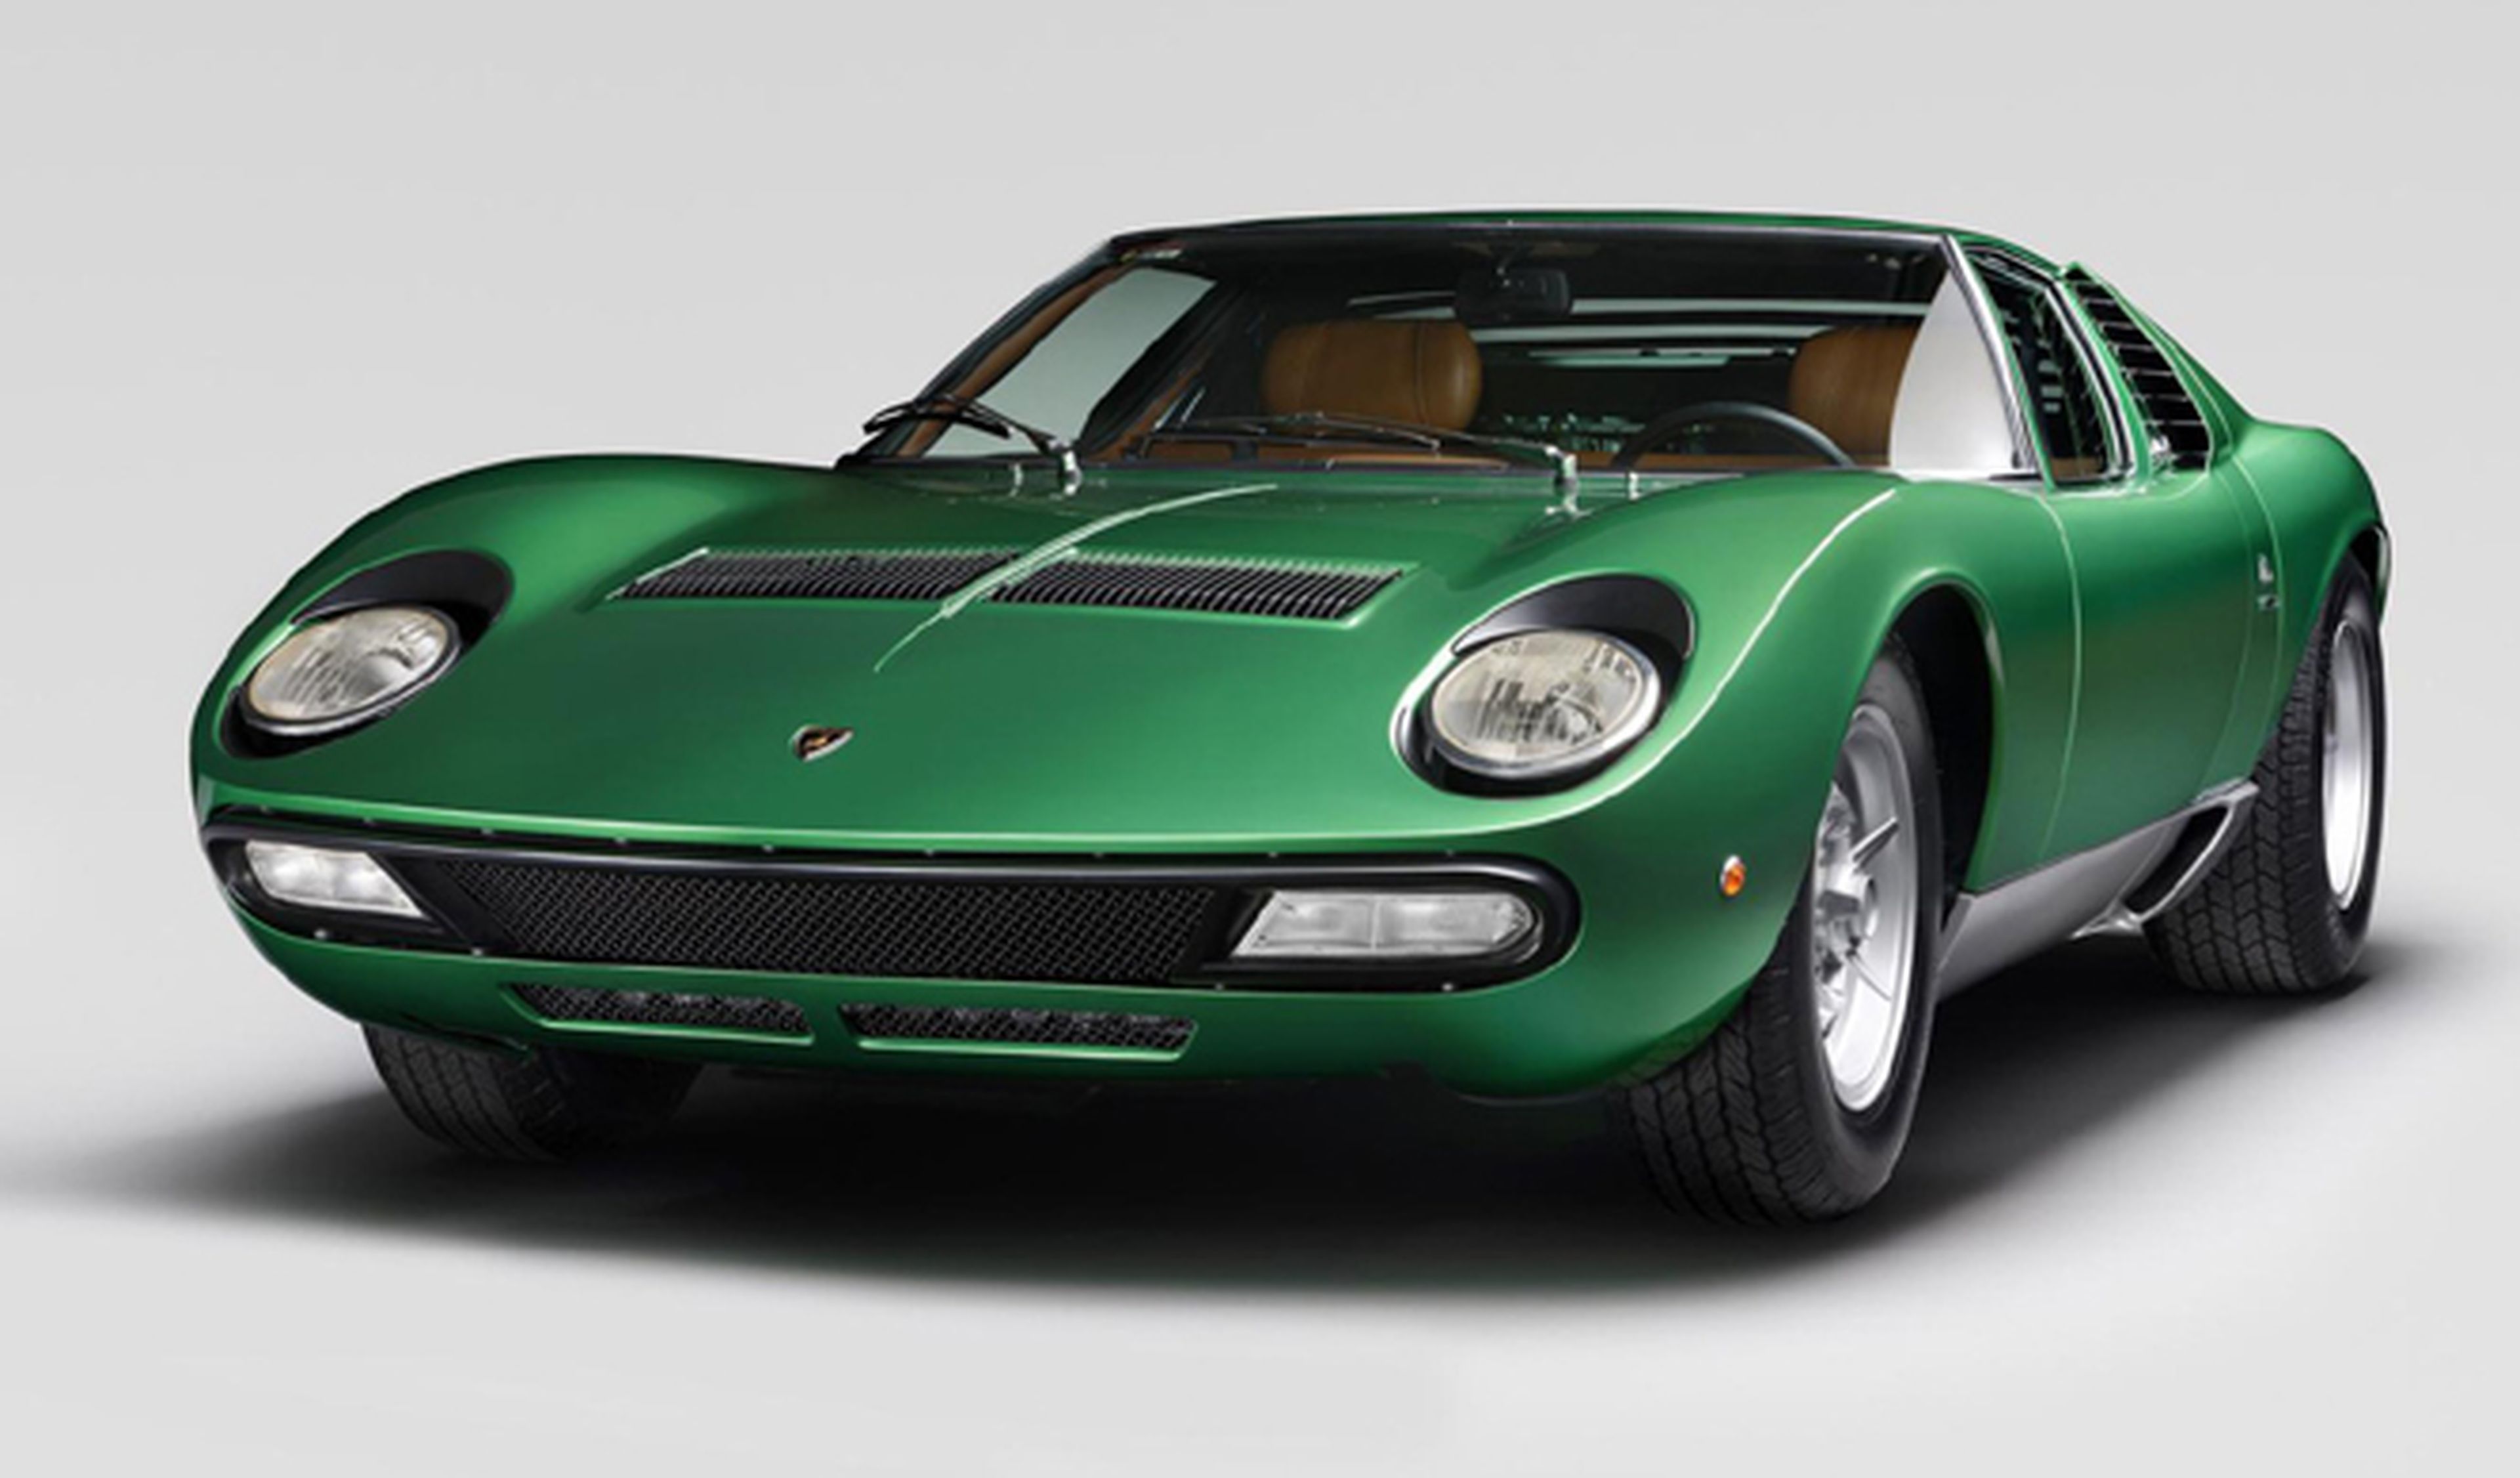 Lamborghini restaura el prototipo del Miura SV de 1971